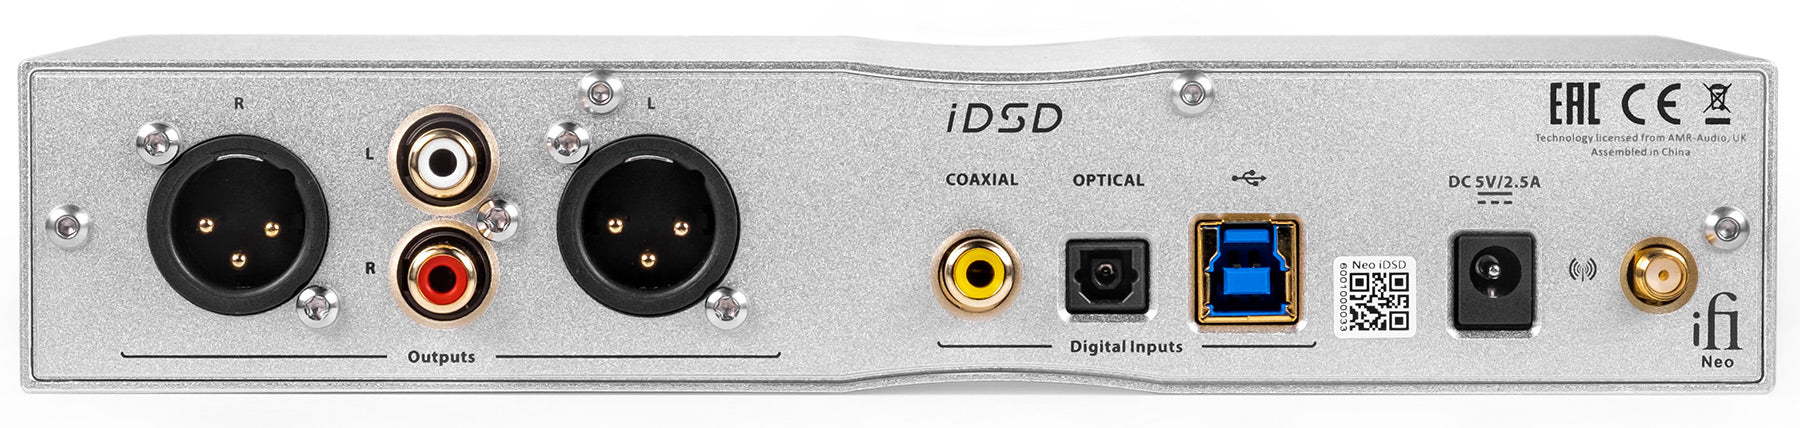 iFi audio NEO iDSD - Desktop Balanced DAC Amplifier system with Bluetooth & MQA decoding support